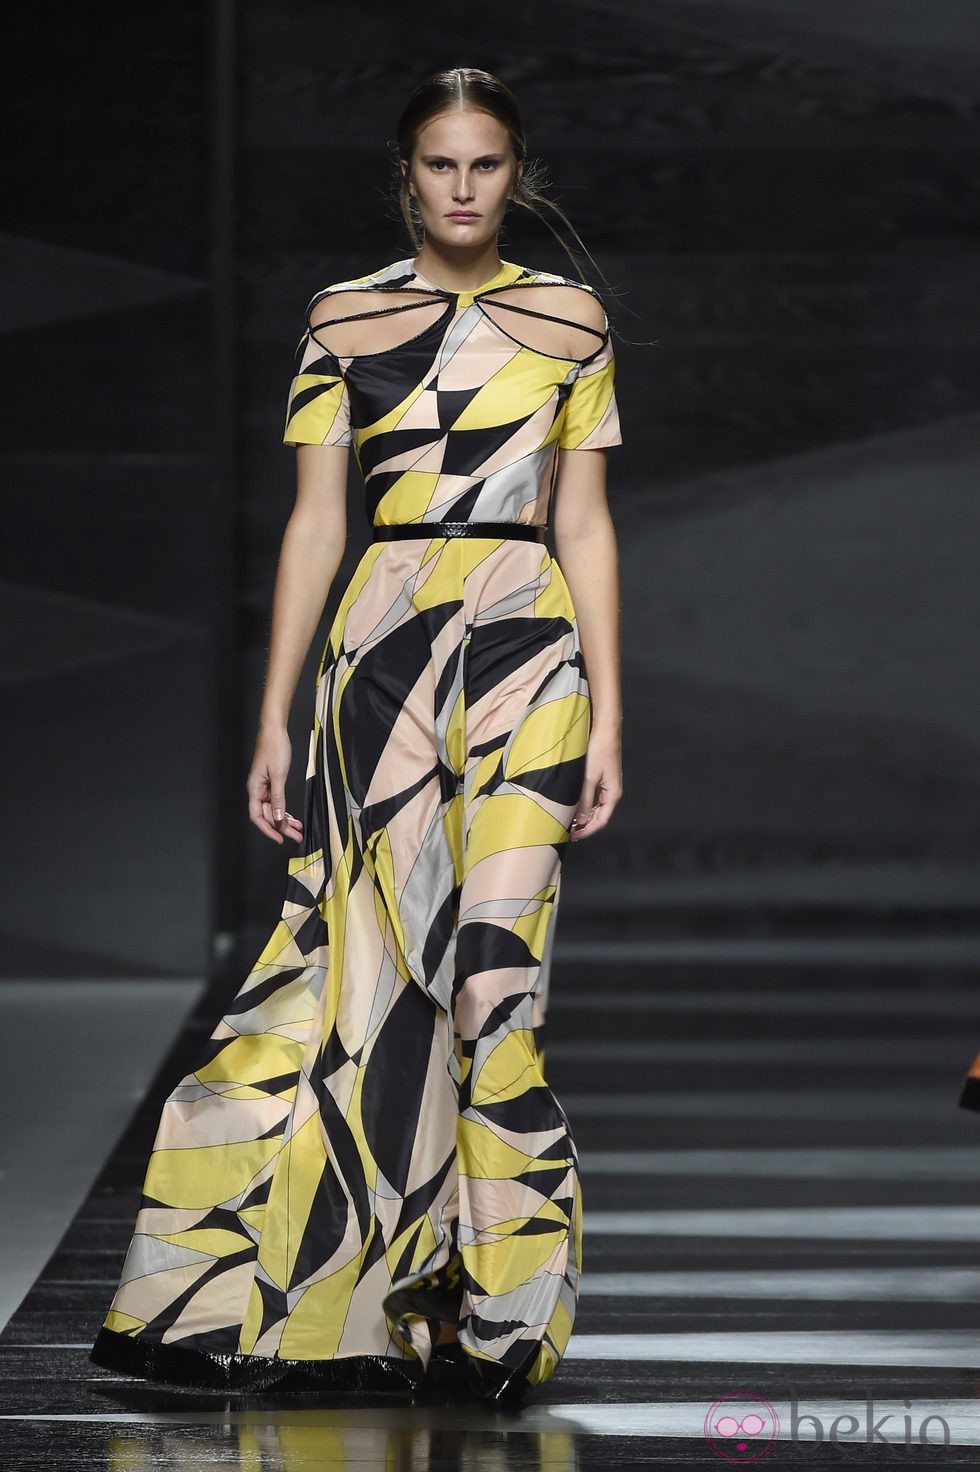 Vestido multicolor de Juanjo Oliva en Madrid Fashion Week primavera/verano 2015